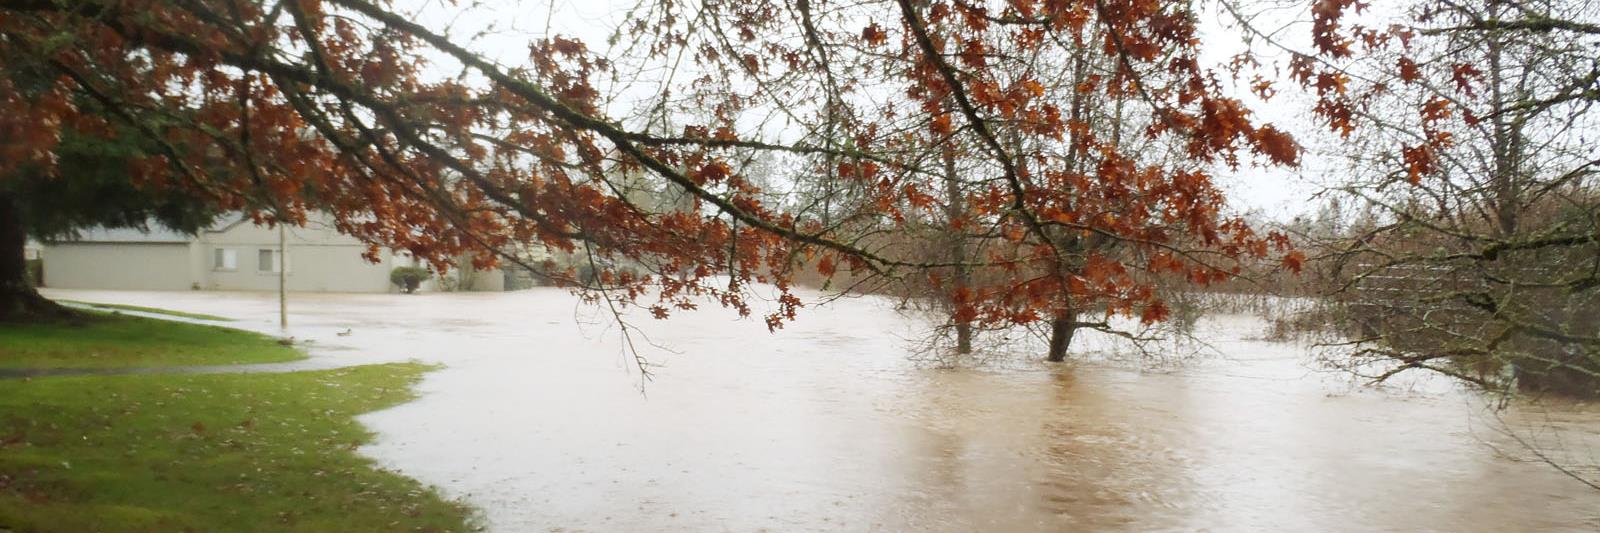 Battle Creek flooding upstream